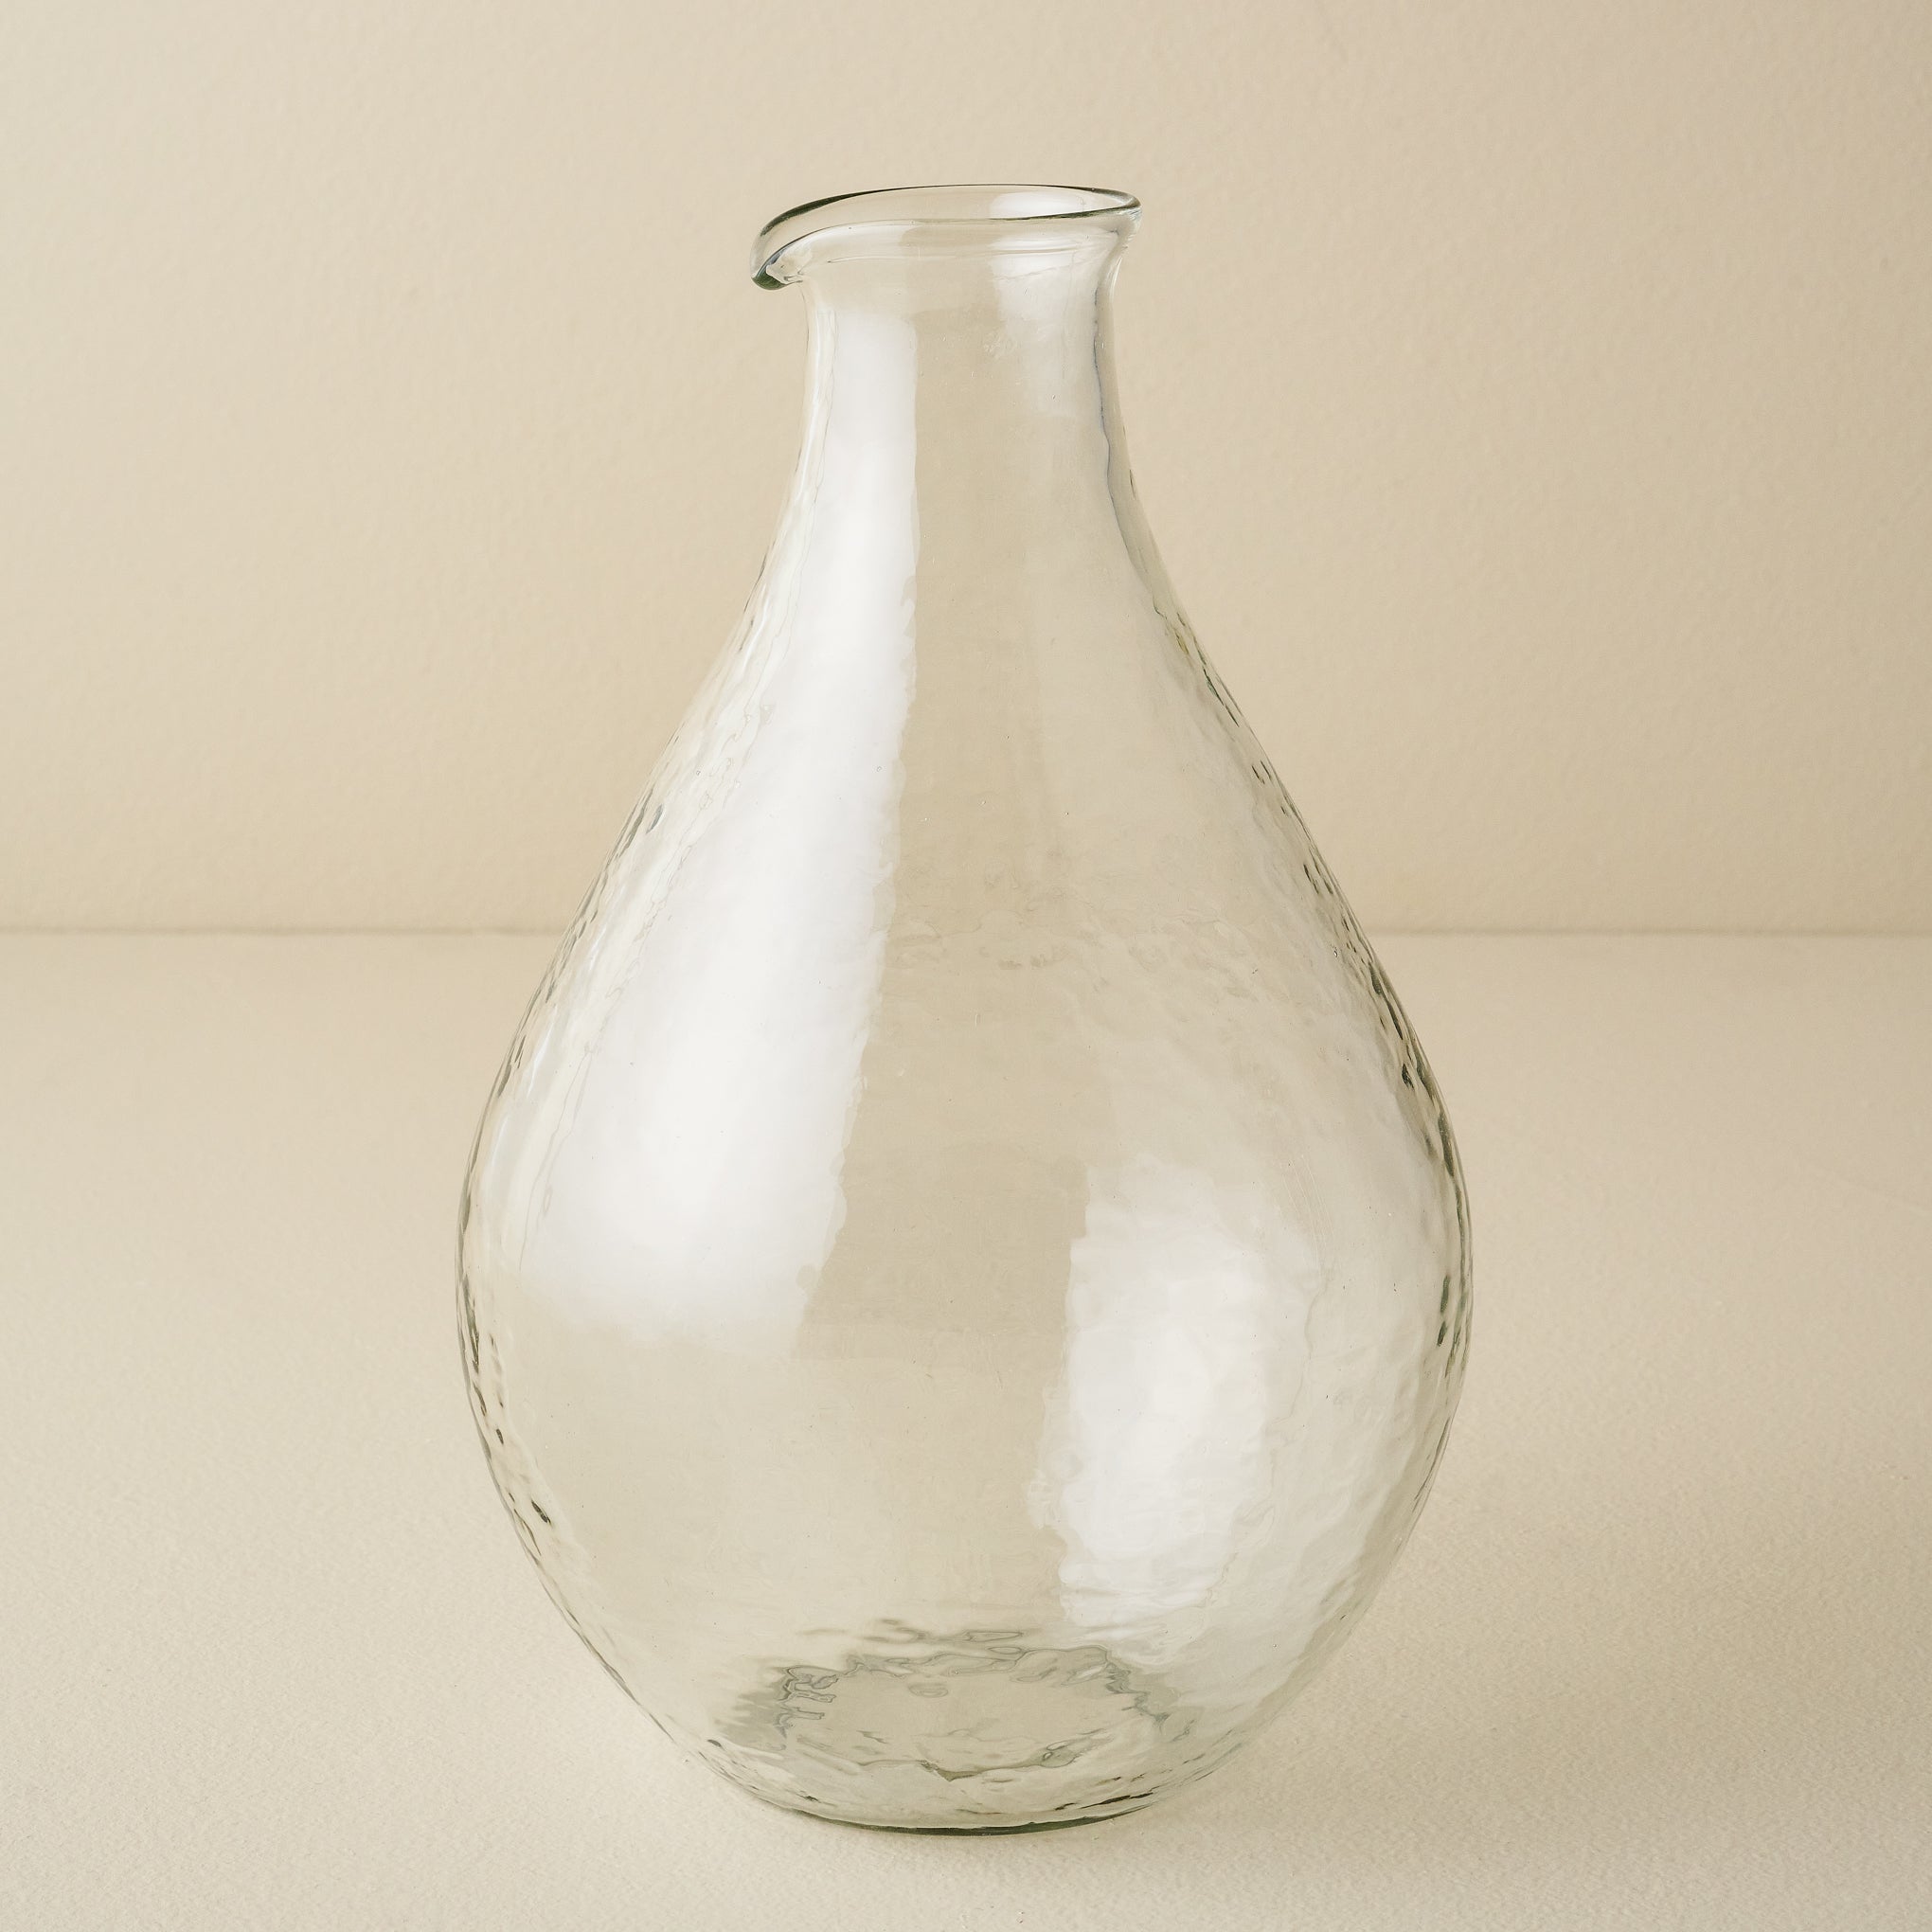 Recycled Glass Globe Carafe $24.00